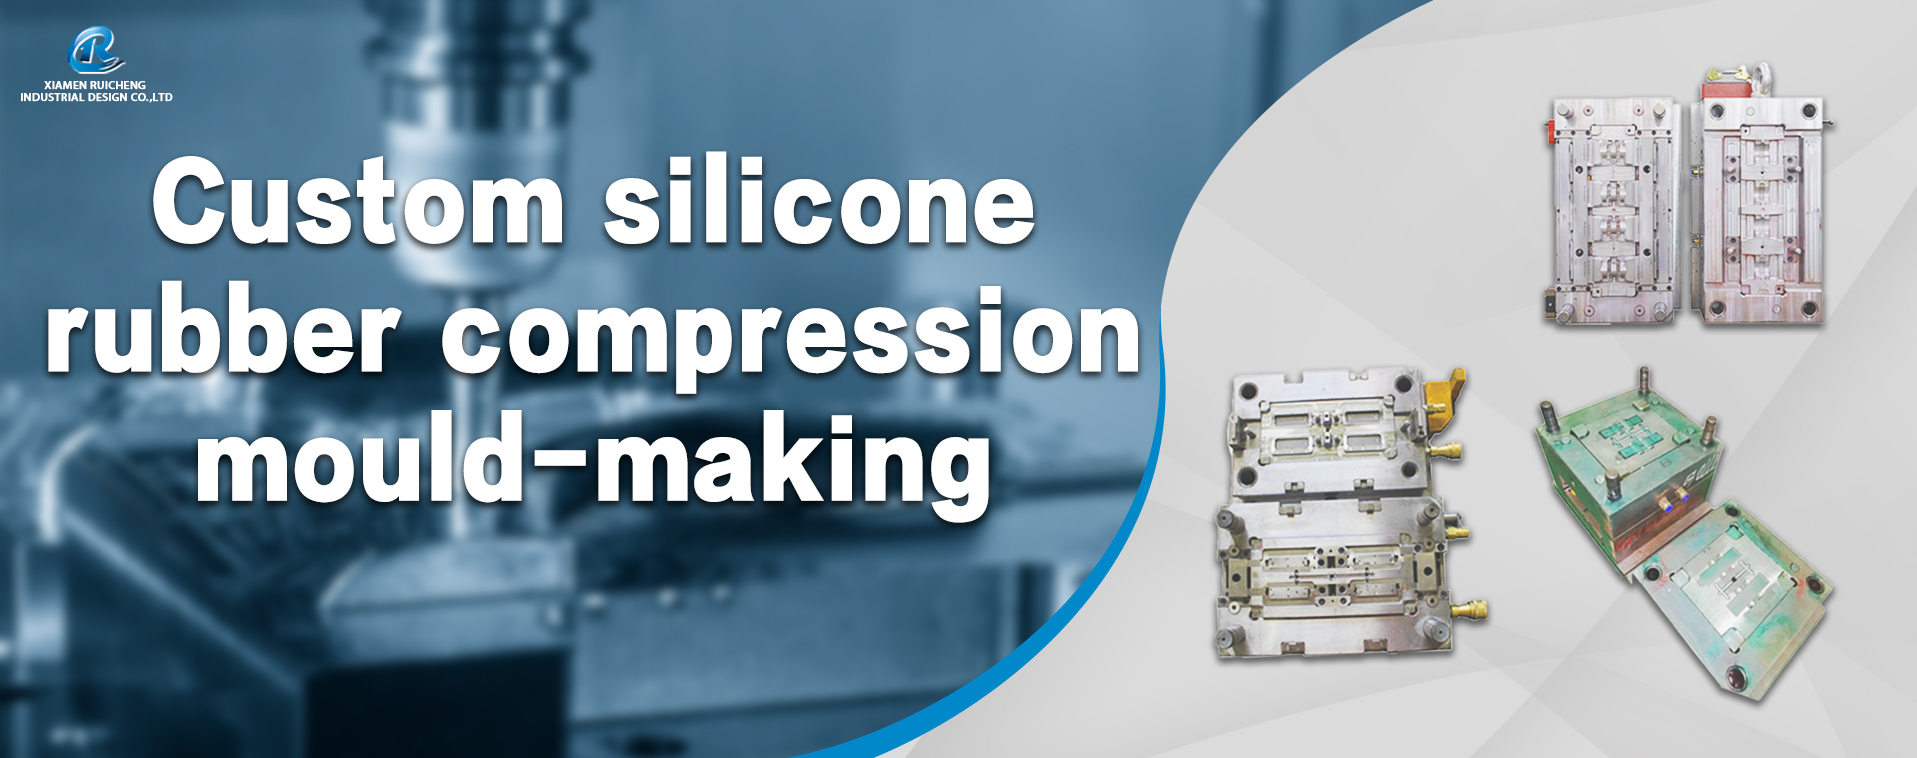 silicone rubber compression mould-making